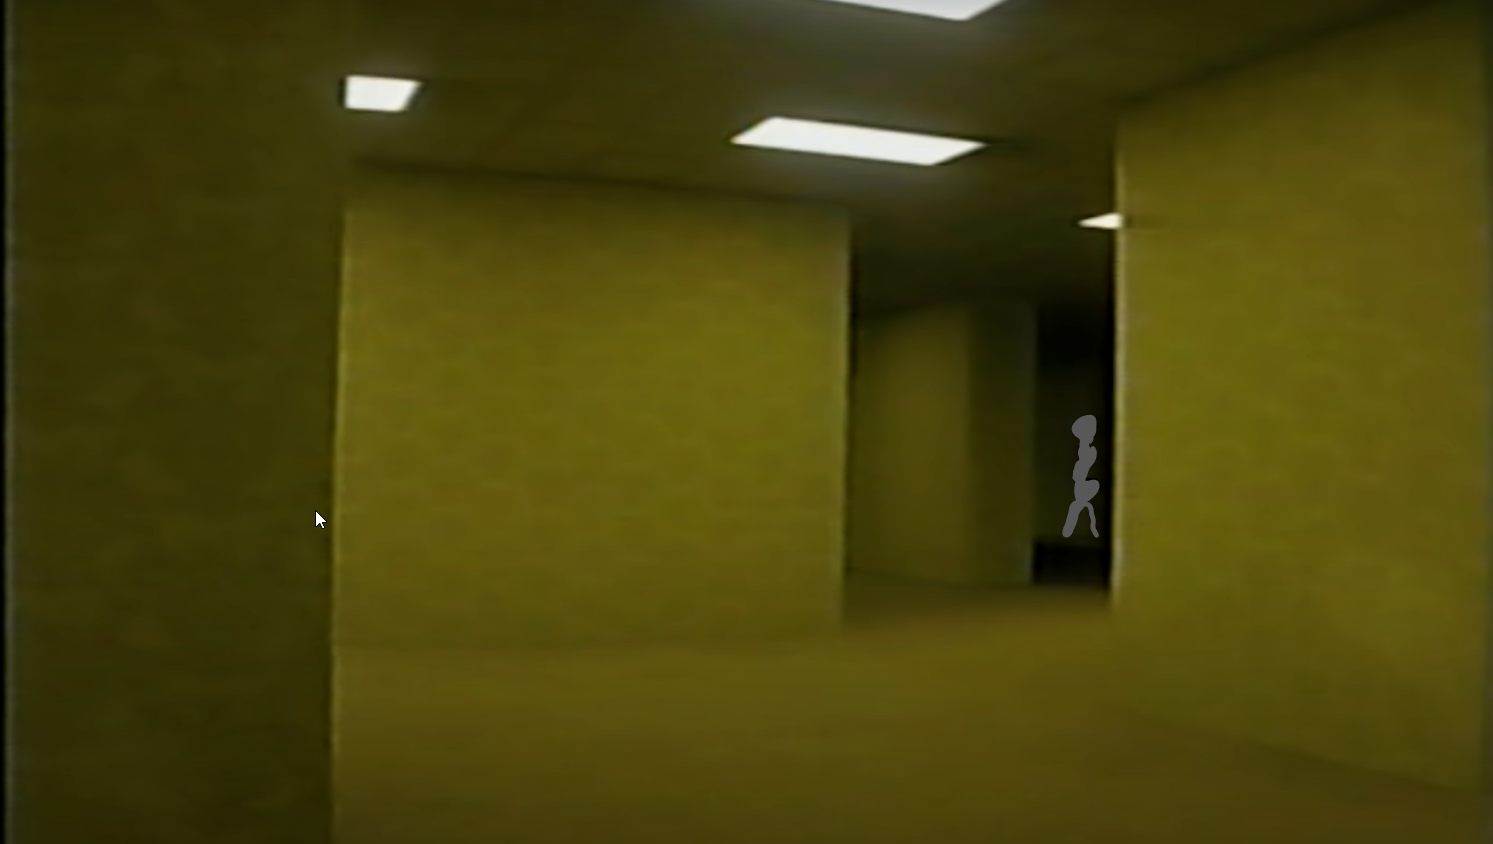 Kane Pixels' Backrooms - Found Footage #2 by isarL - Game Jolt